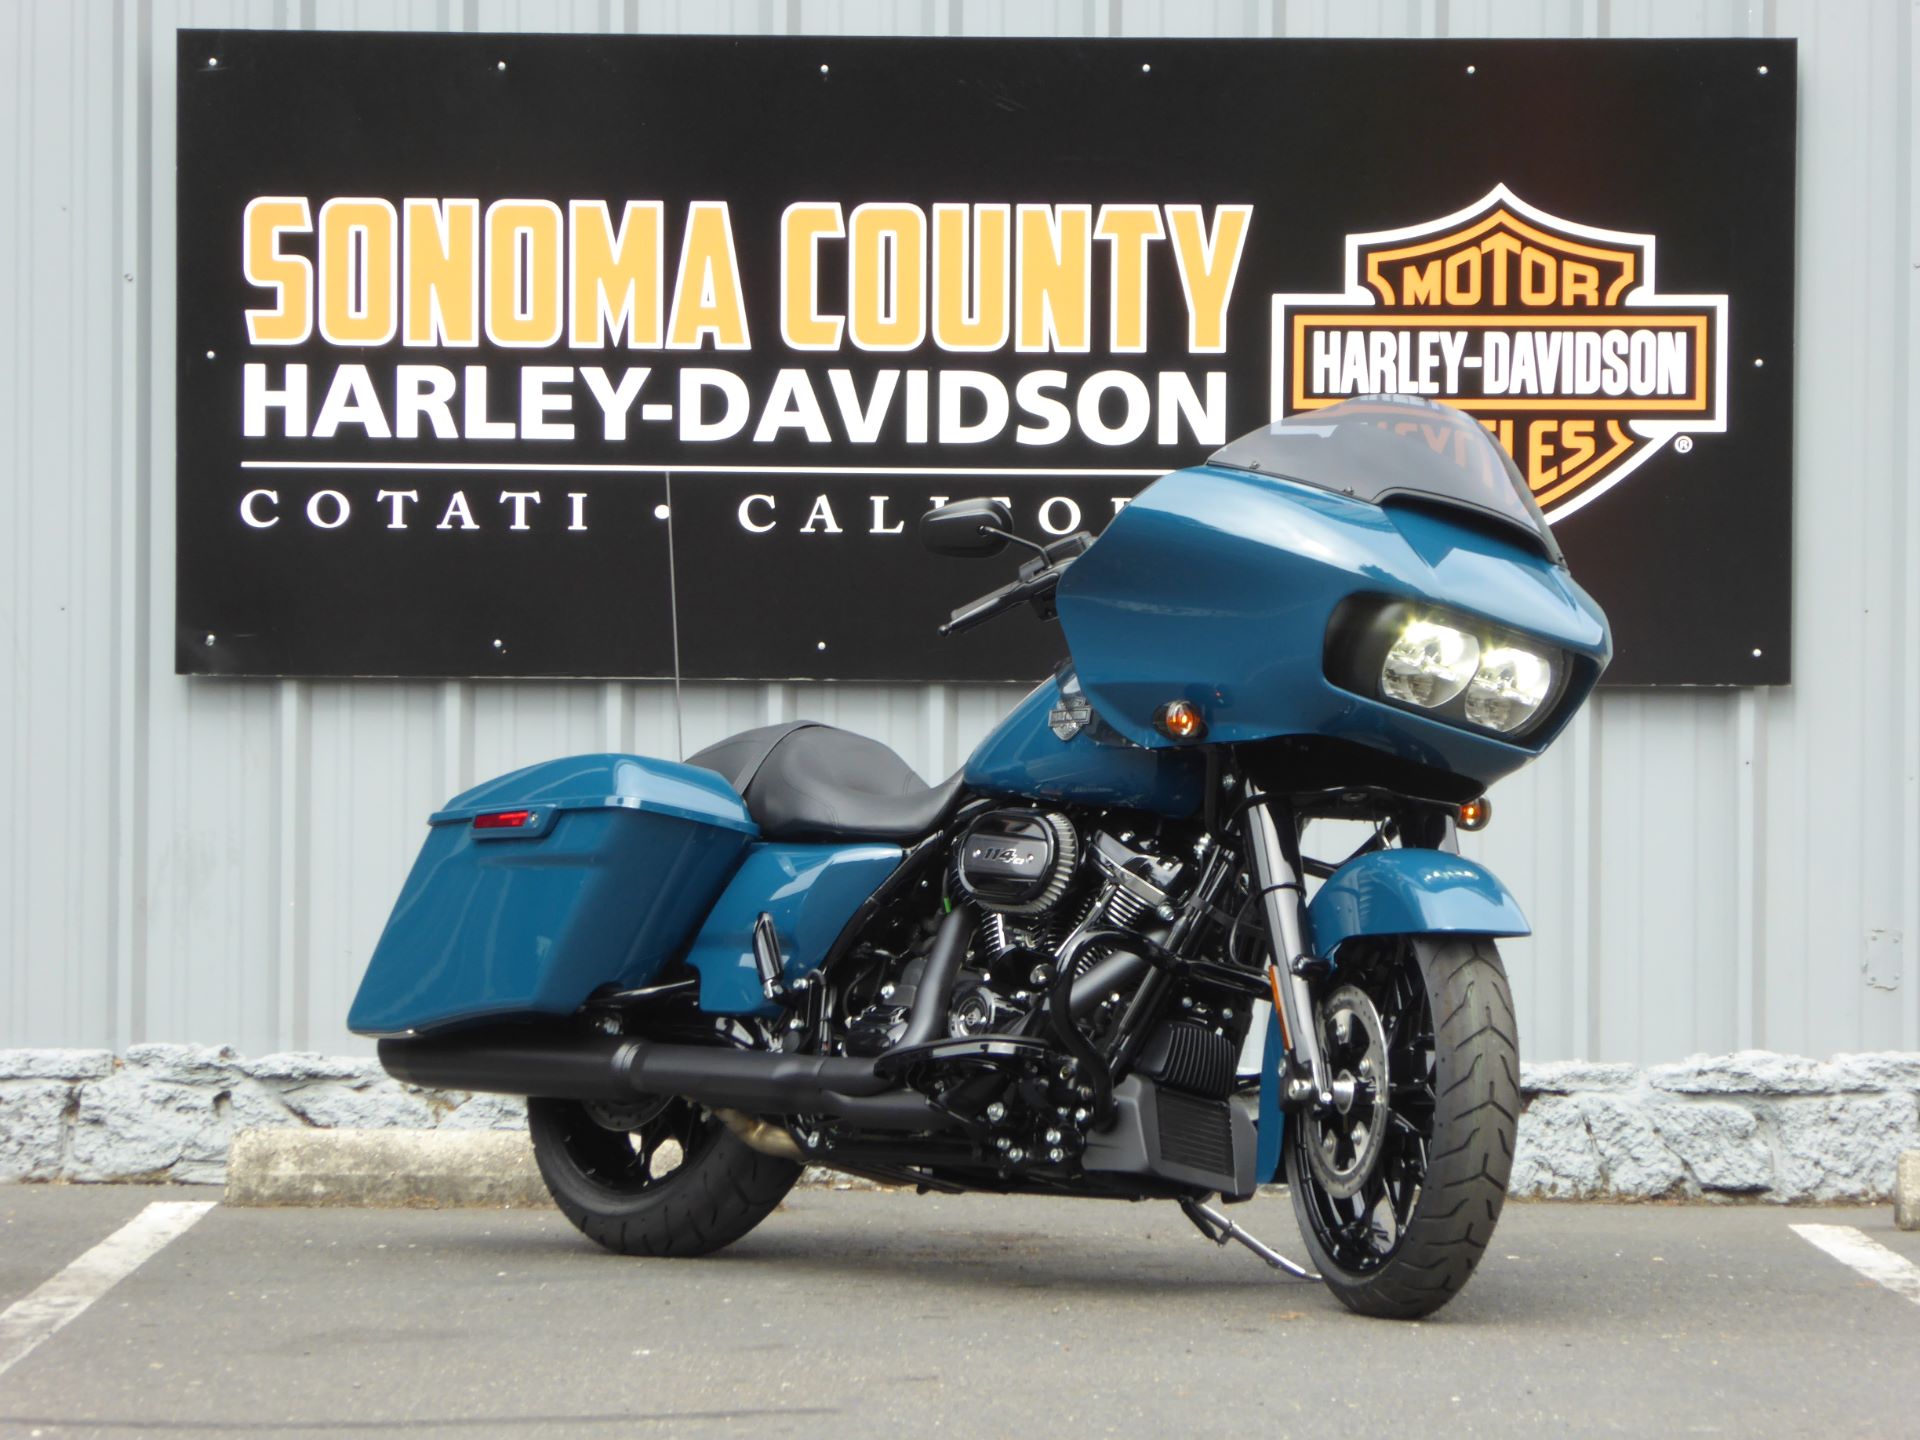 2021 Harley-Davidson Road Glide® Special in Cotati, California - Photo 2